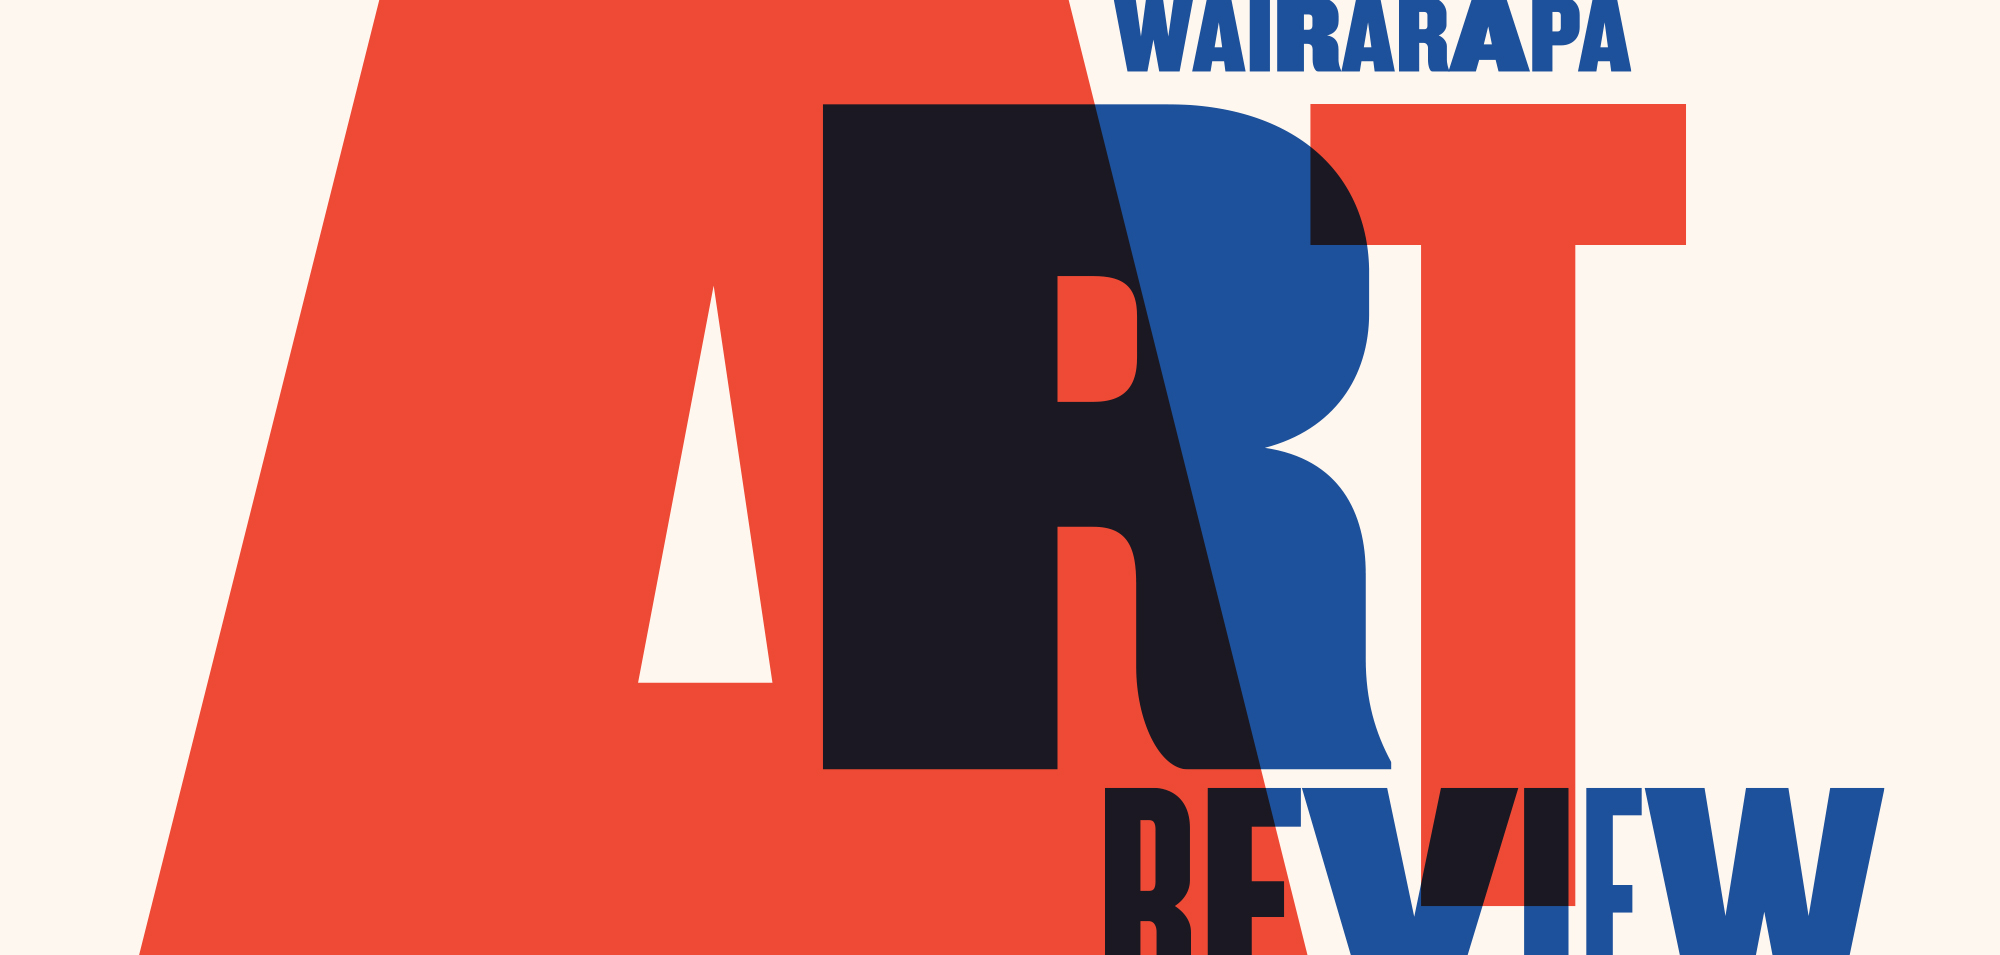 Wairarapa Art Review 2021